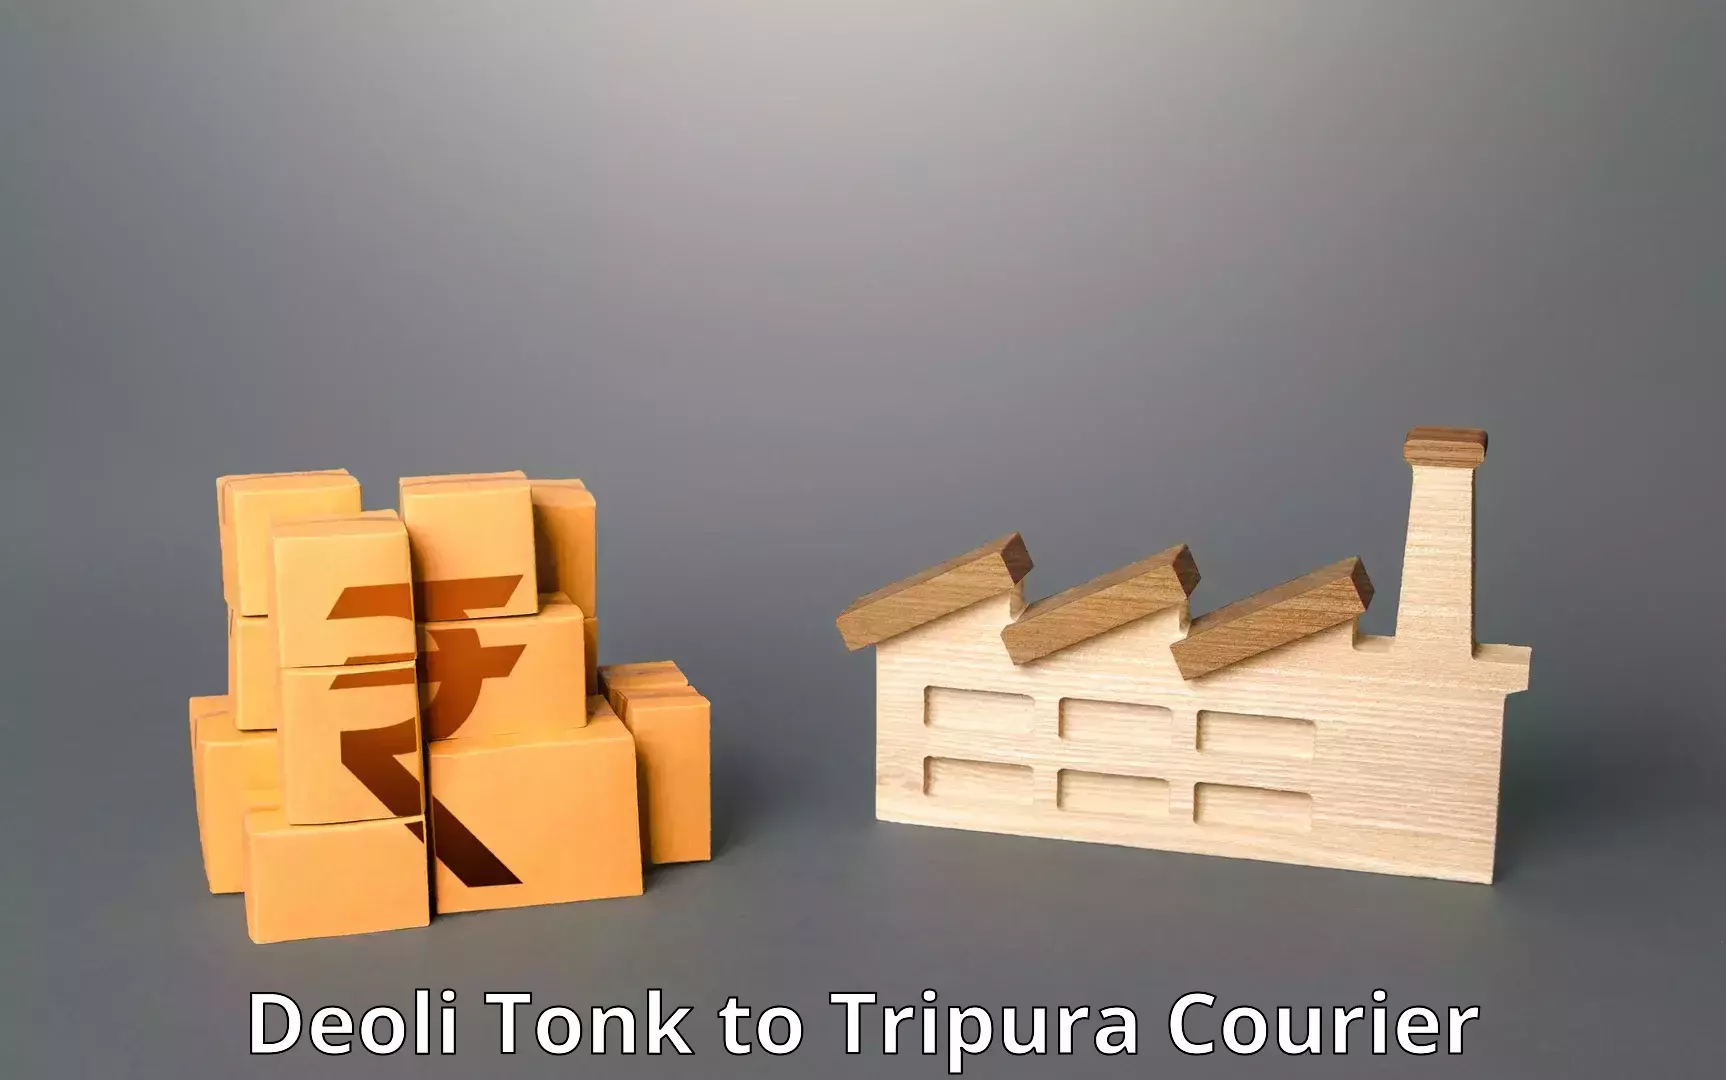 International parcel service Deoli Tonk to Tripura